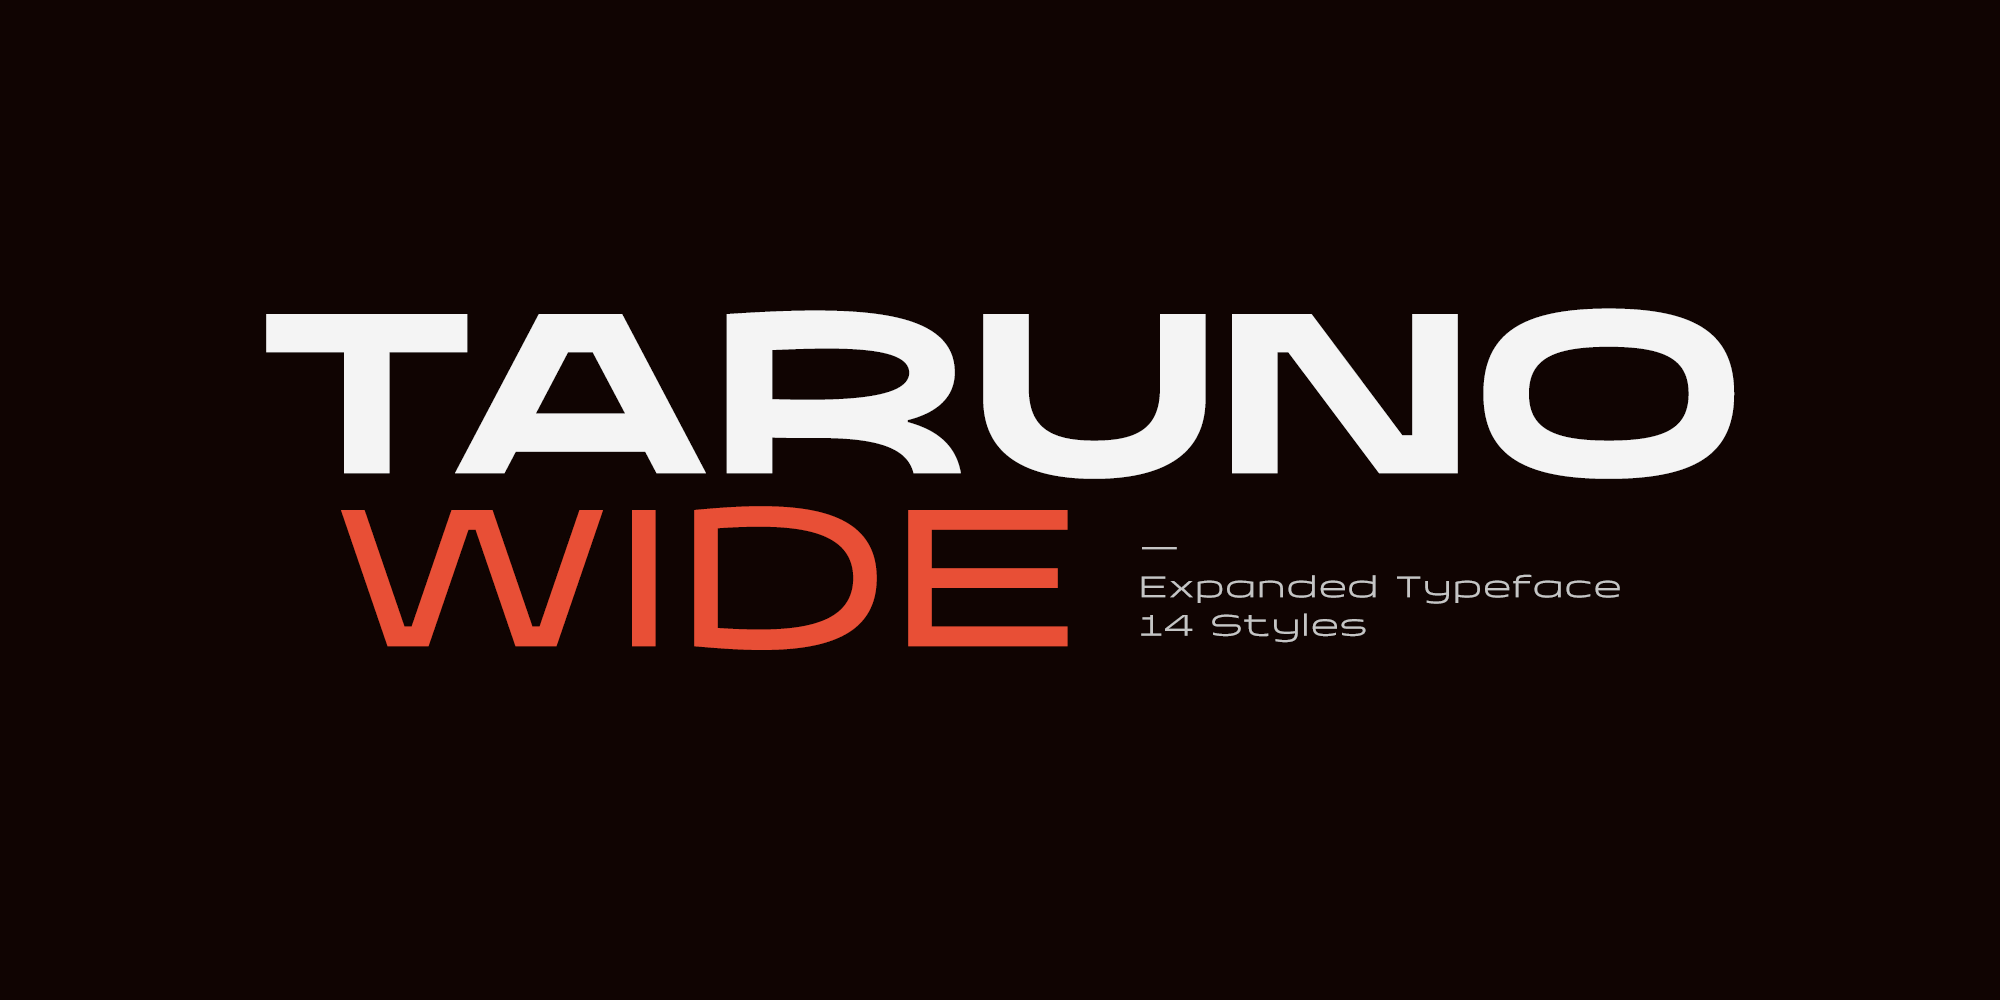 Taruno Wide Typeface